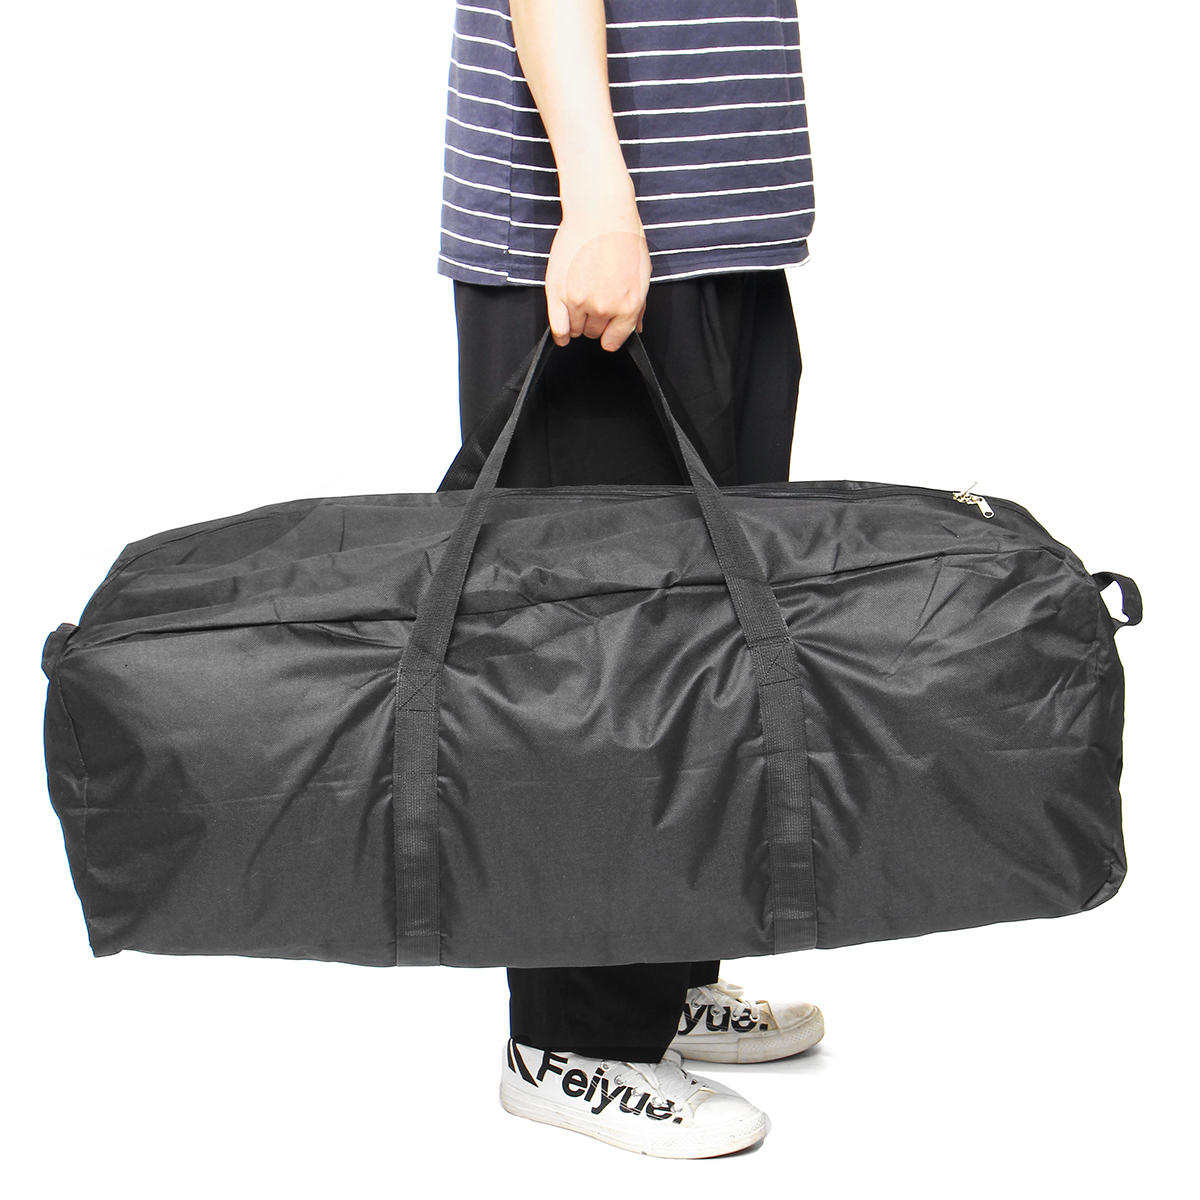 Portable Folding Waterproof Storage Bag Outdoor Traveling Hiking Sports Bags Handbags-S/M/L